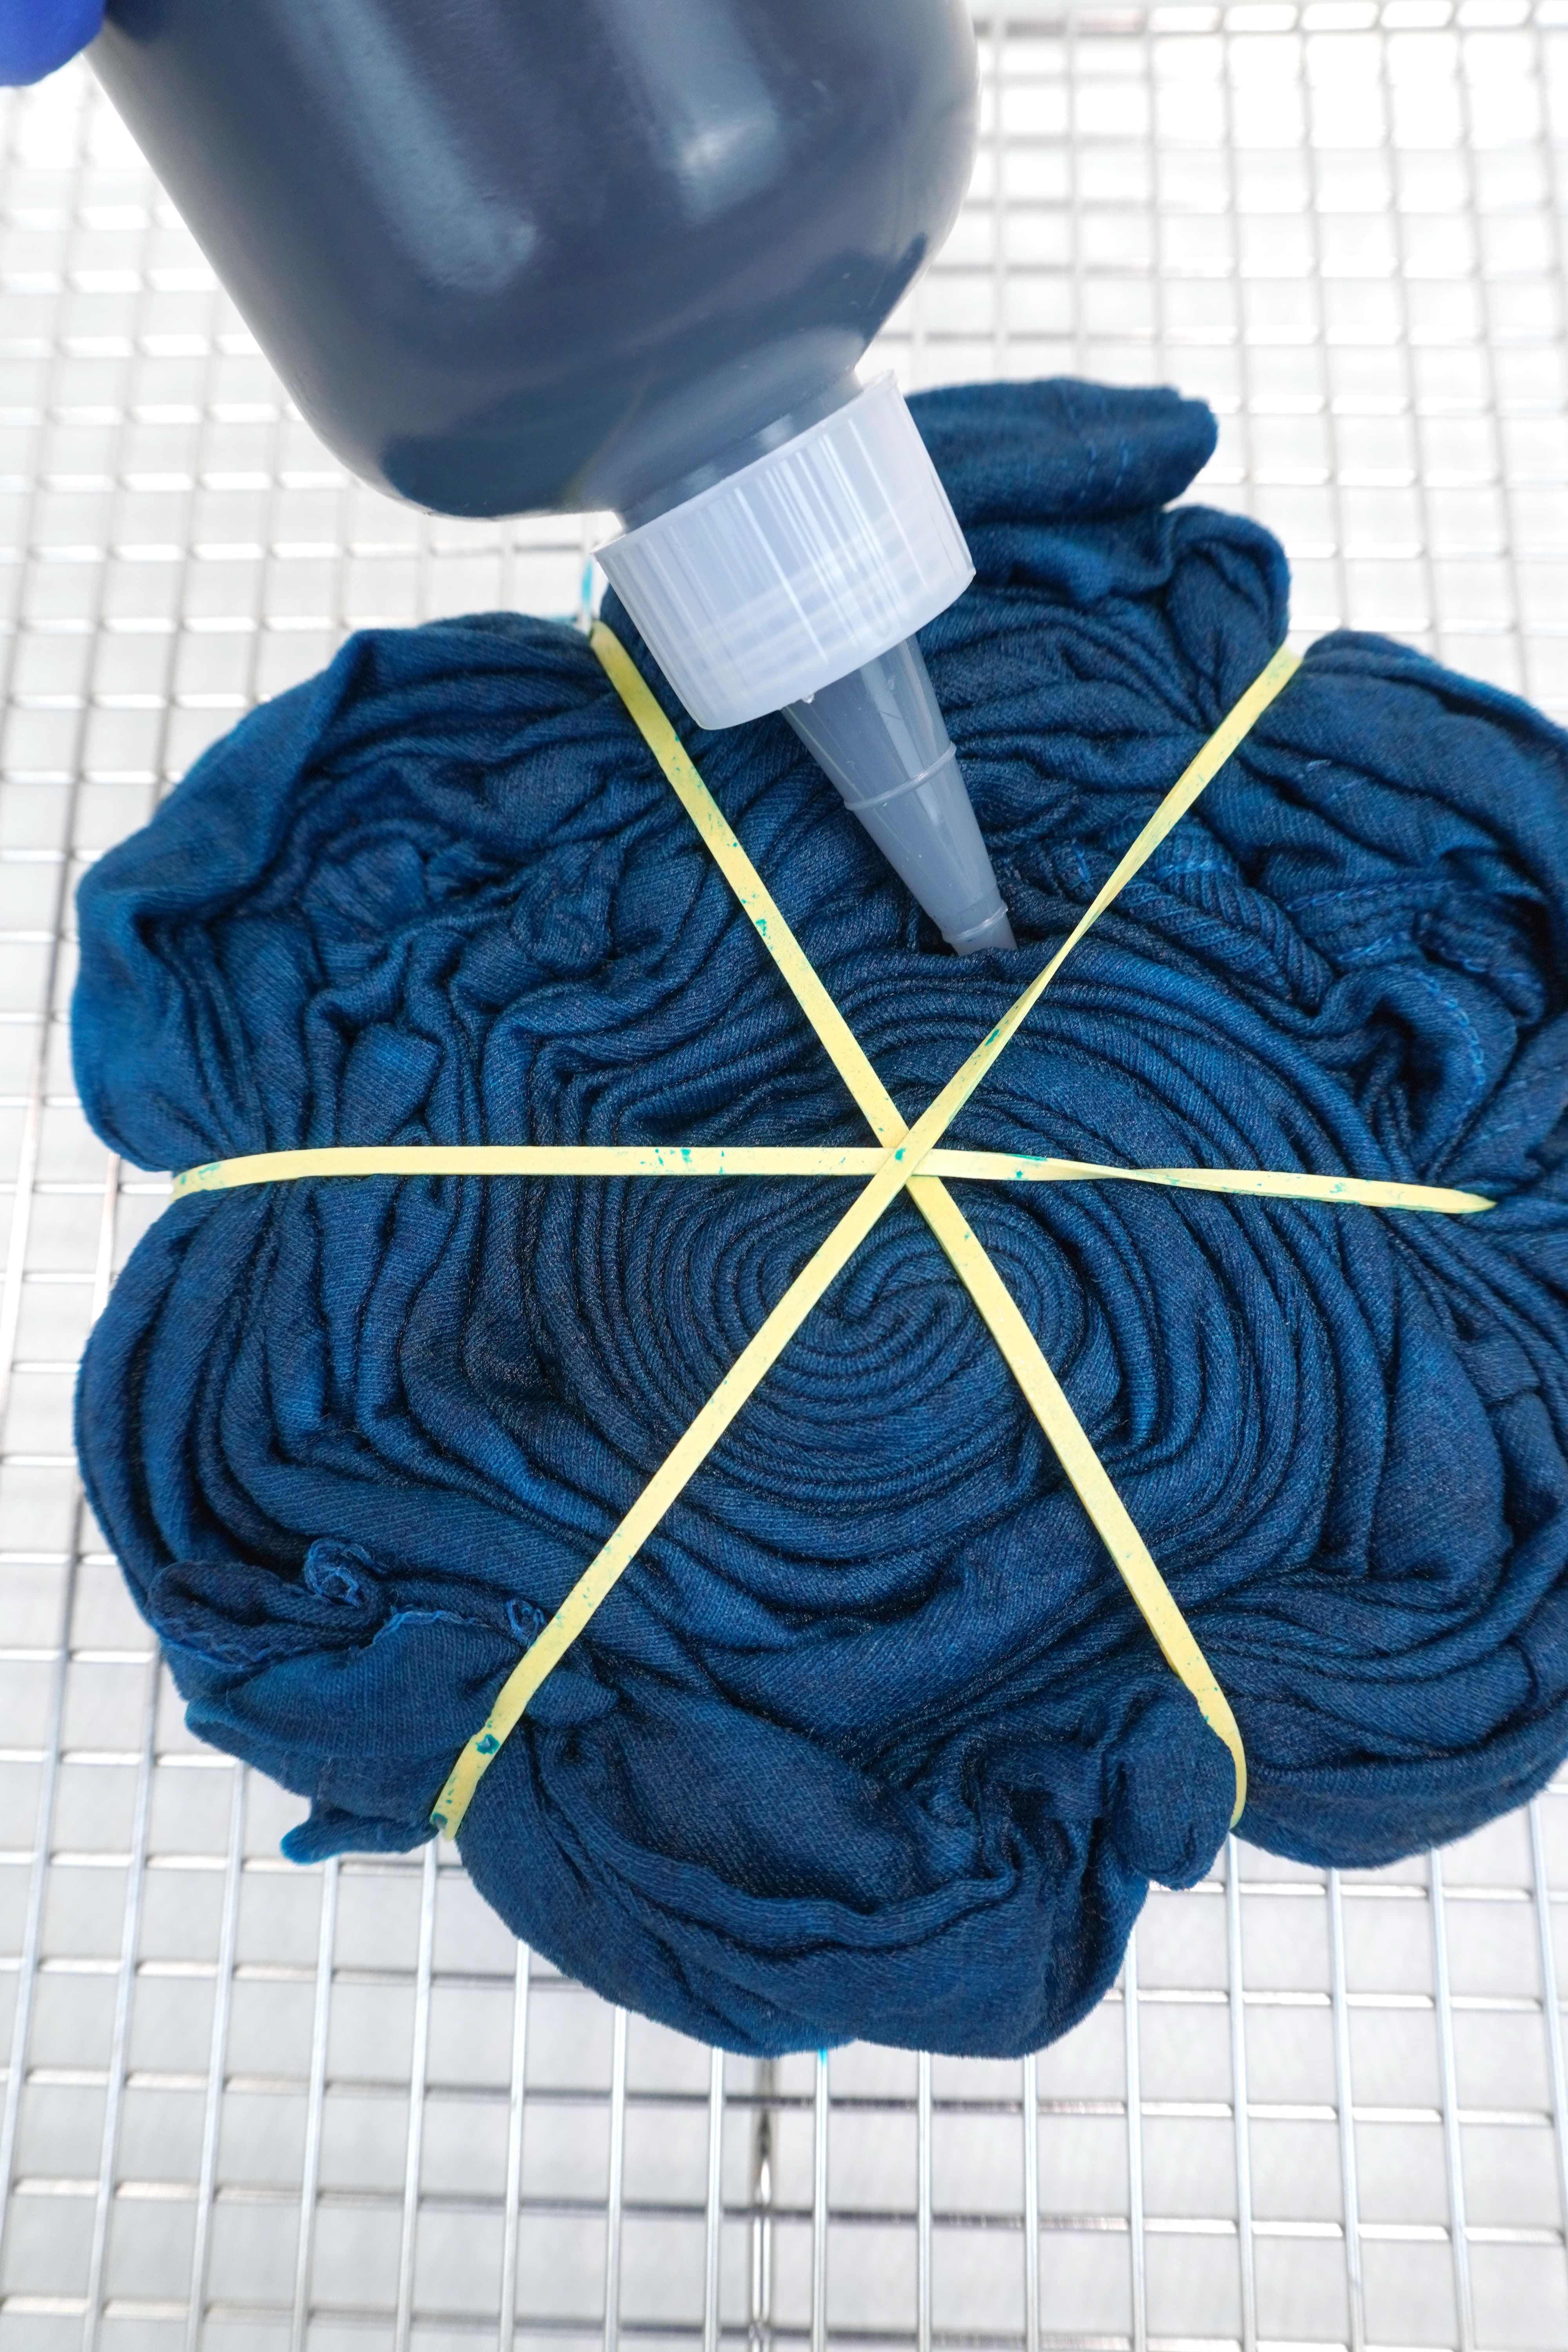 Close up of bottle applying dark teal blue dye to a spiral folded tie-dye shirt